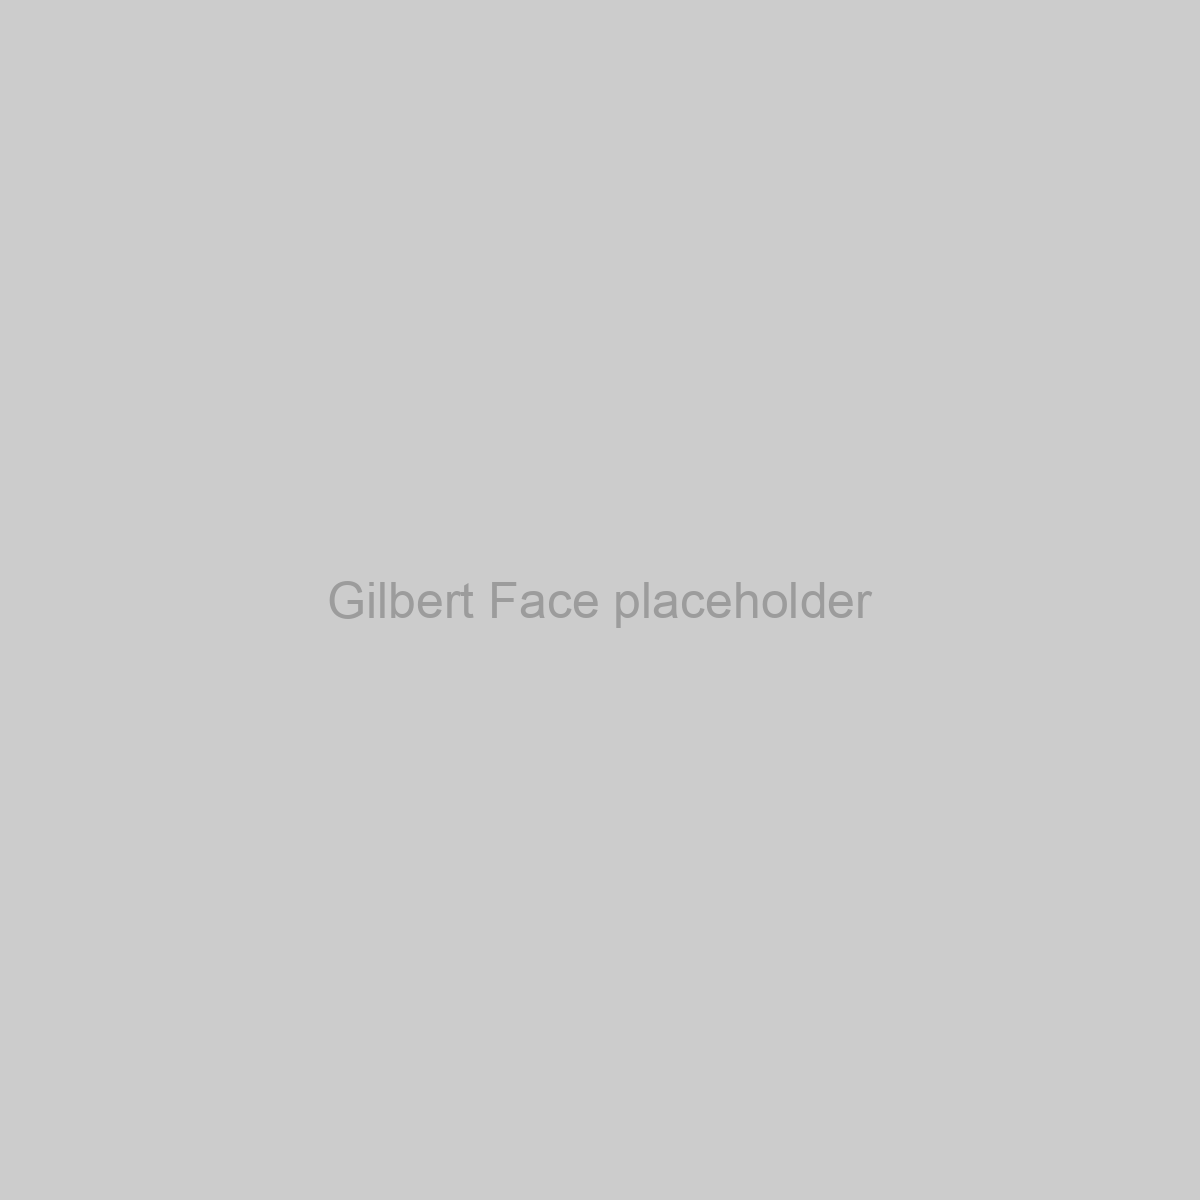 Gilbert Face Placeholder Image